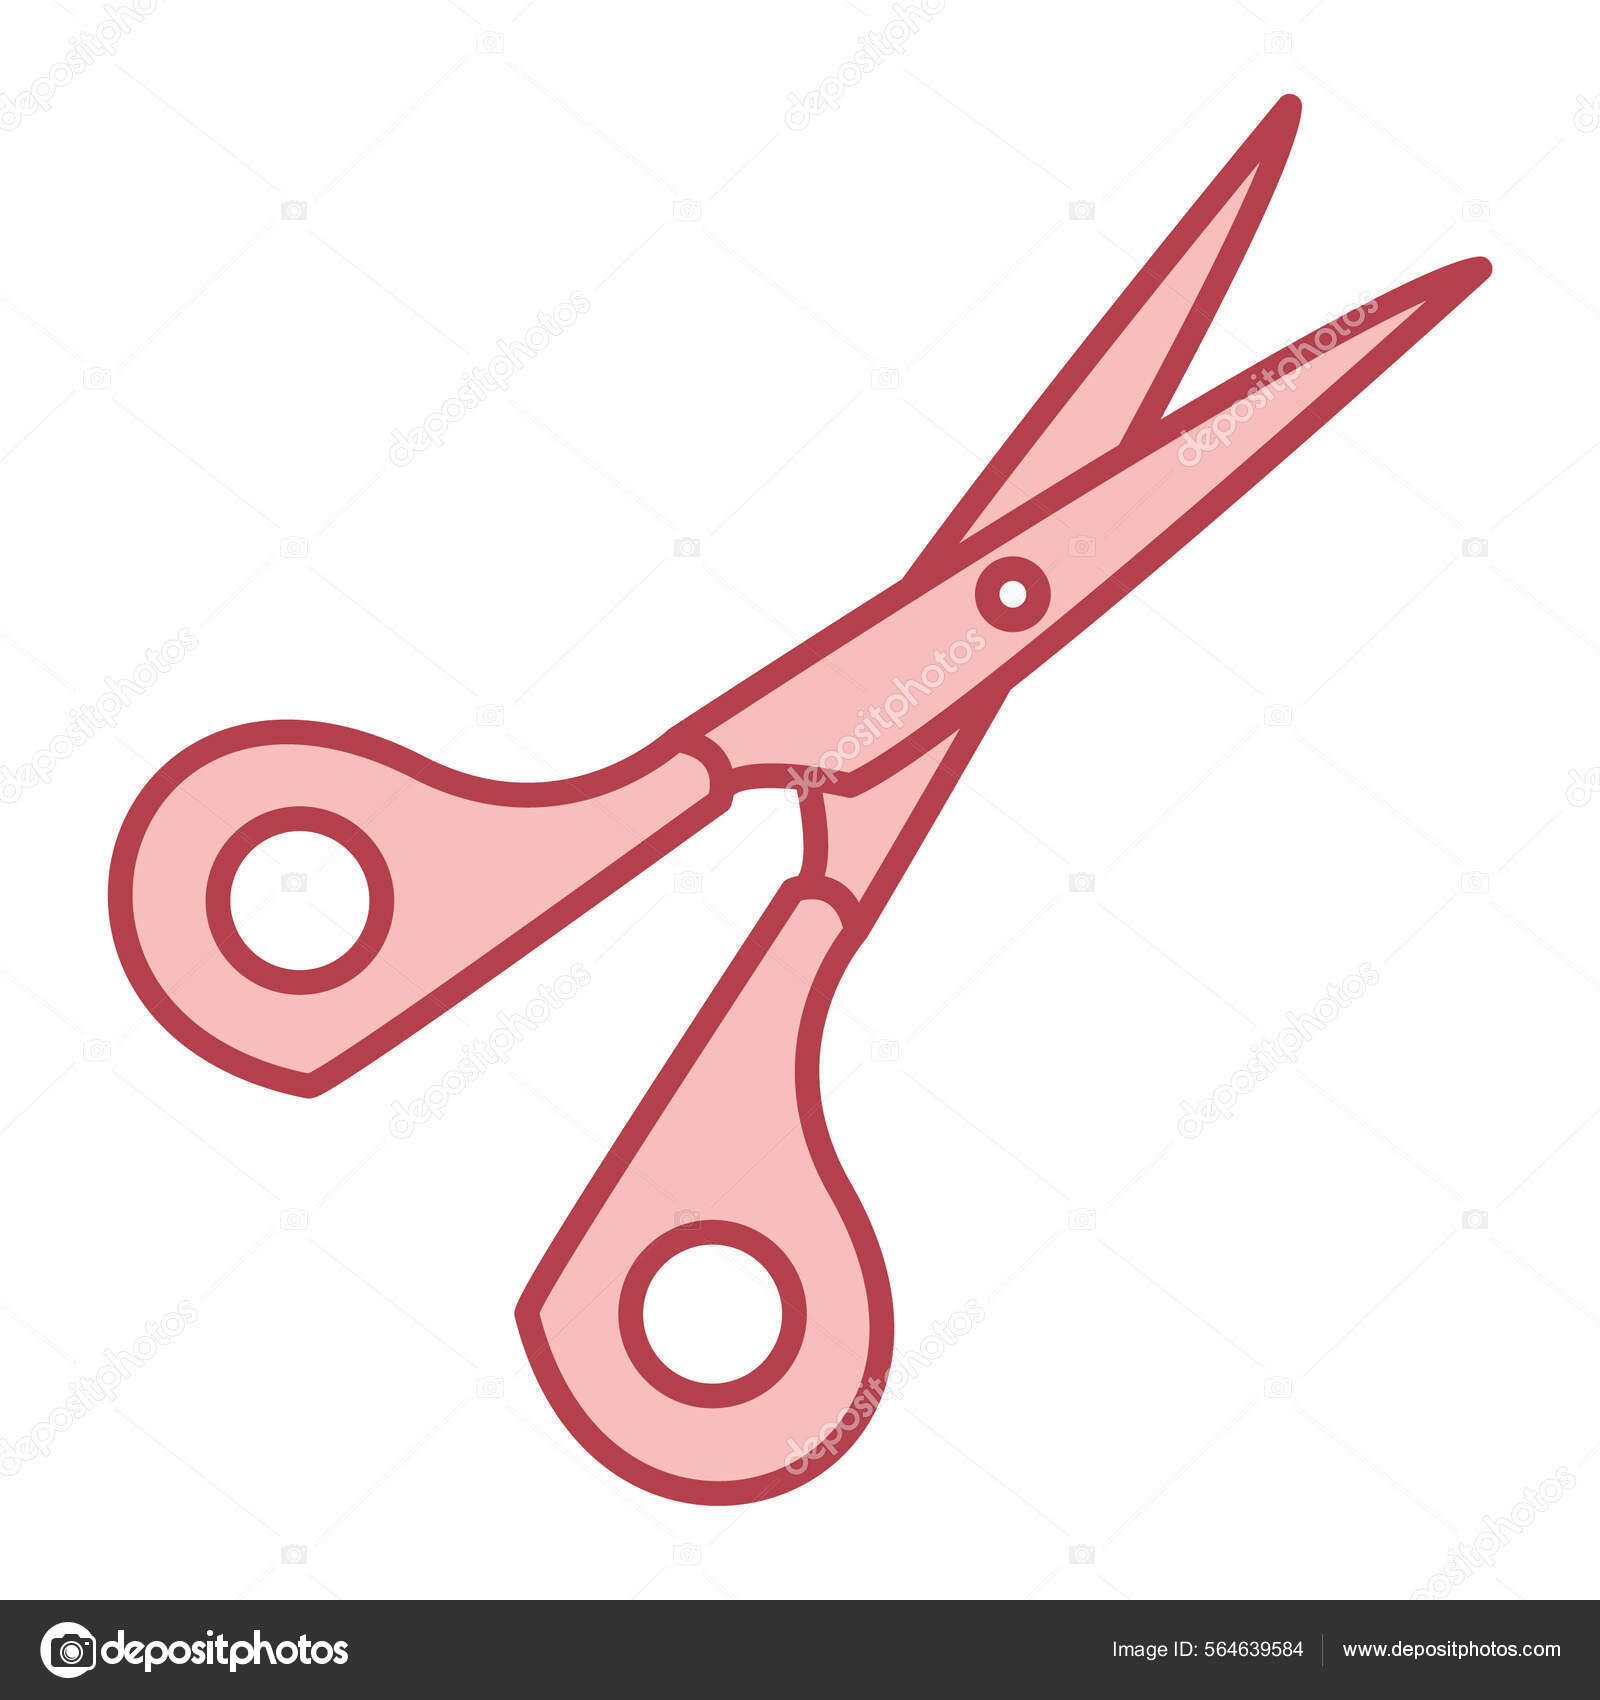 Scissors hairdressing scissor line art icon Vector Image